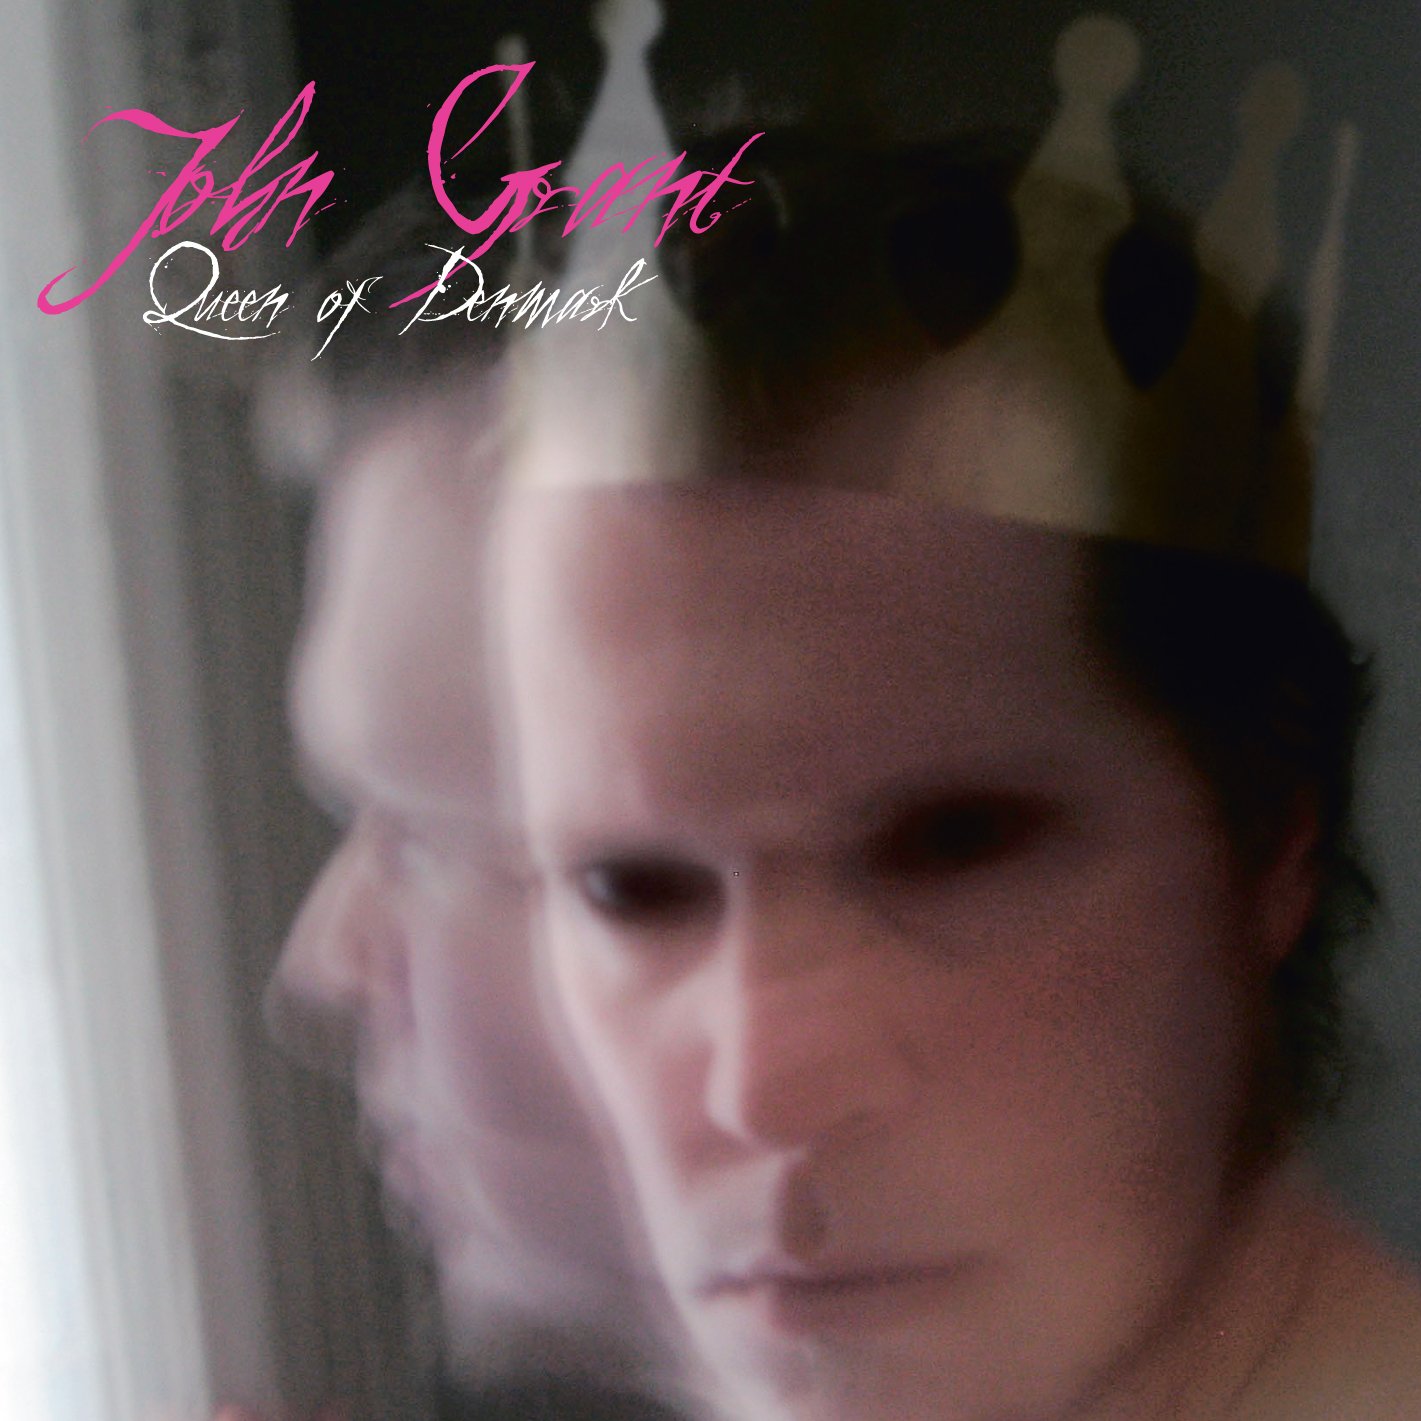 John Grant "Queen of Denmark" LP